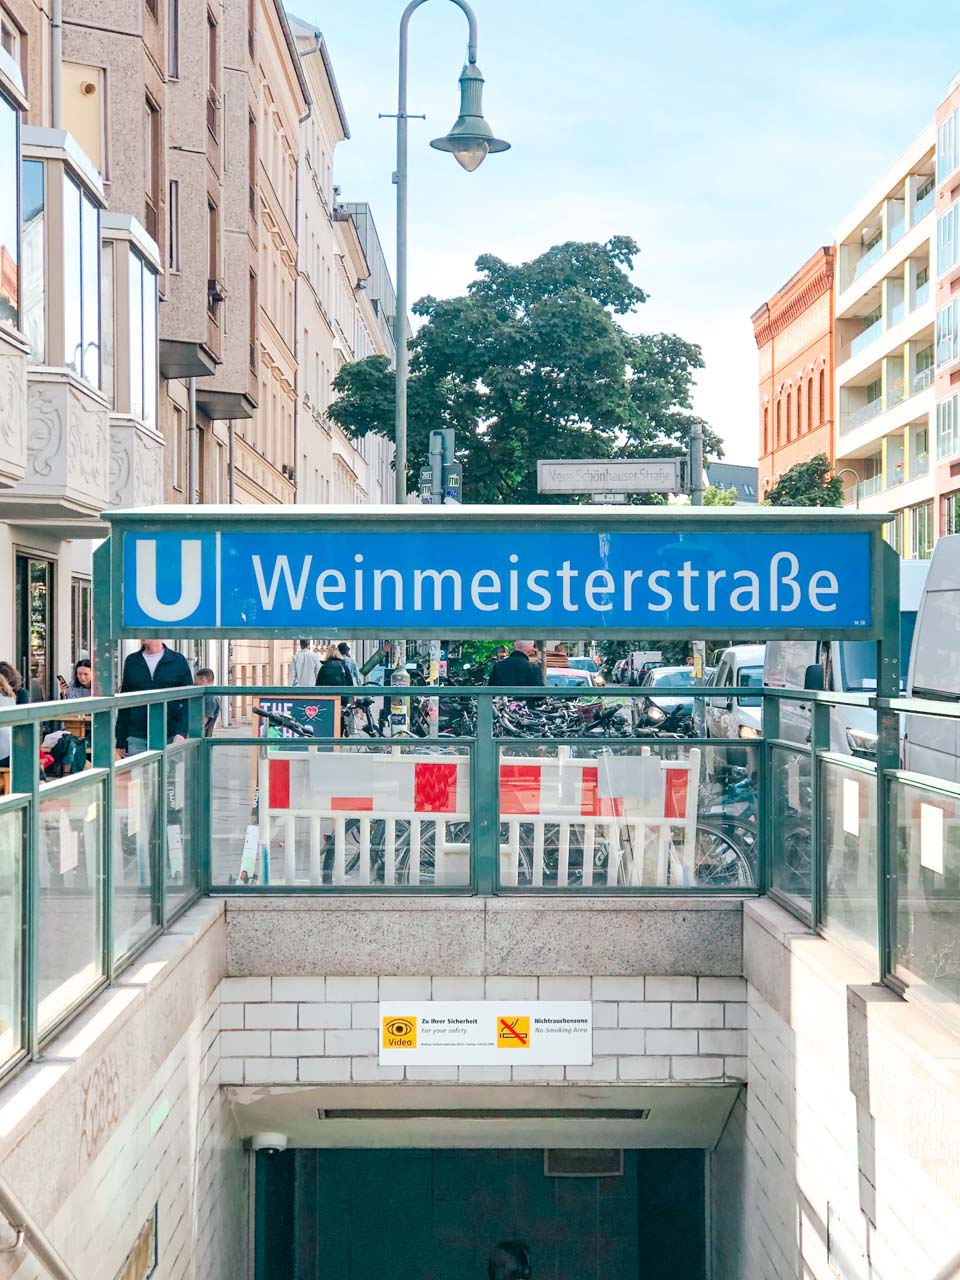 Sign marking the entrance to the Weinmeisterstraße U-Bahn station in Berlin, Germany